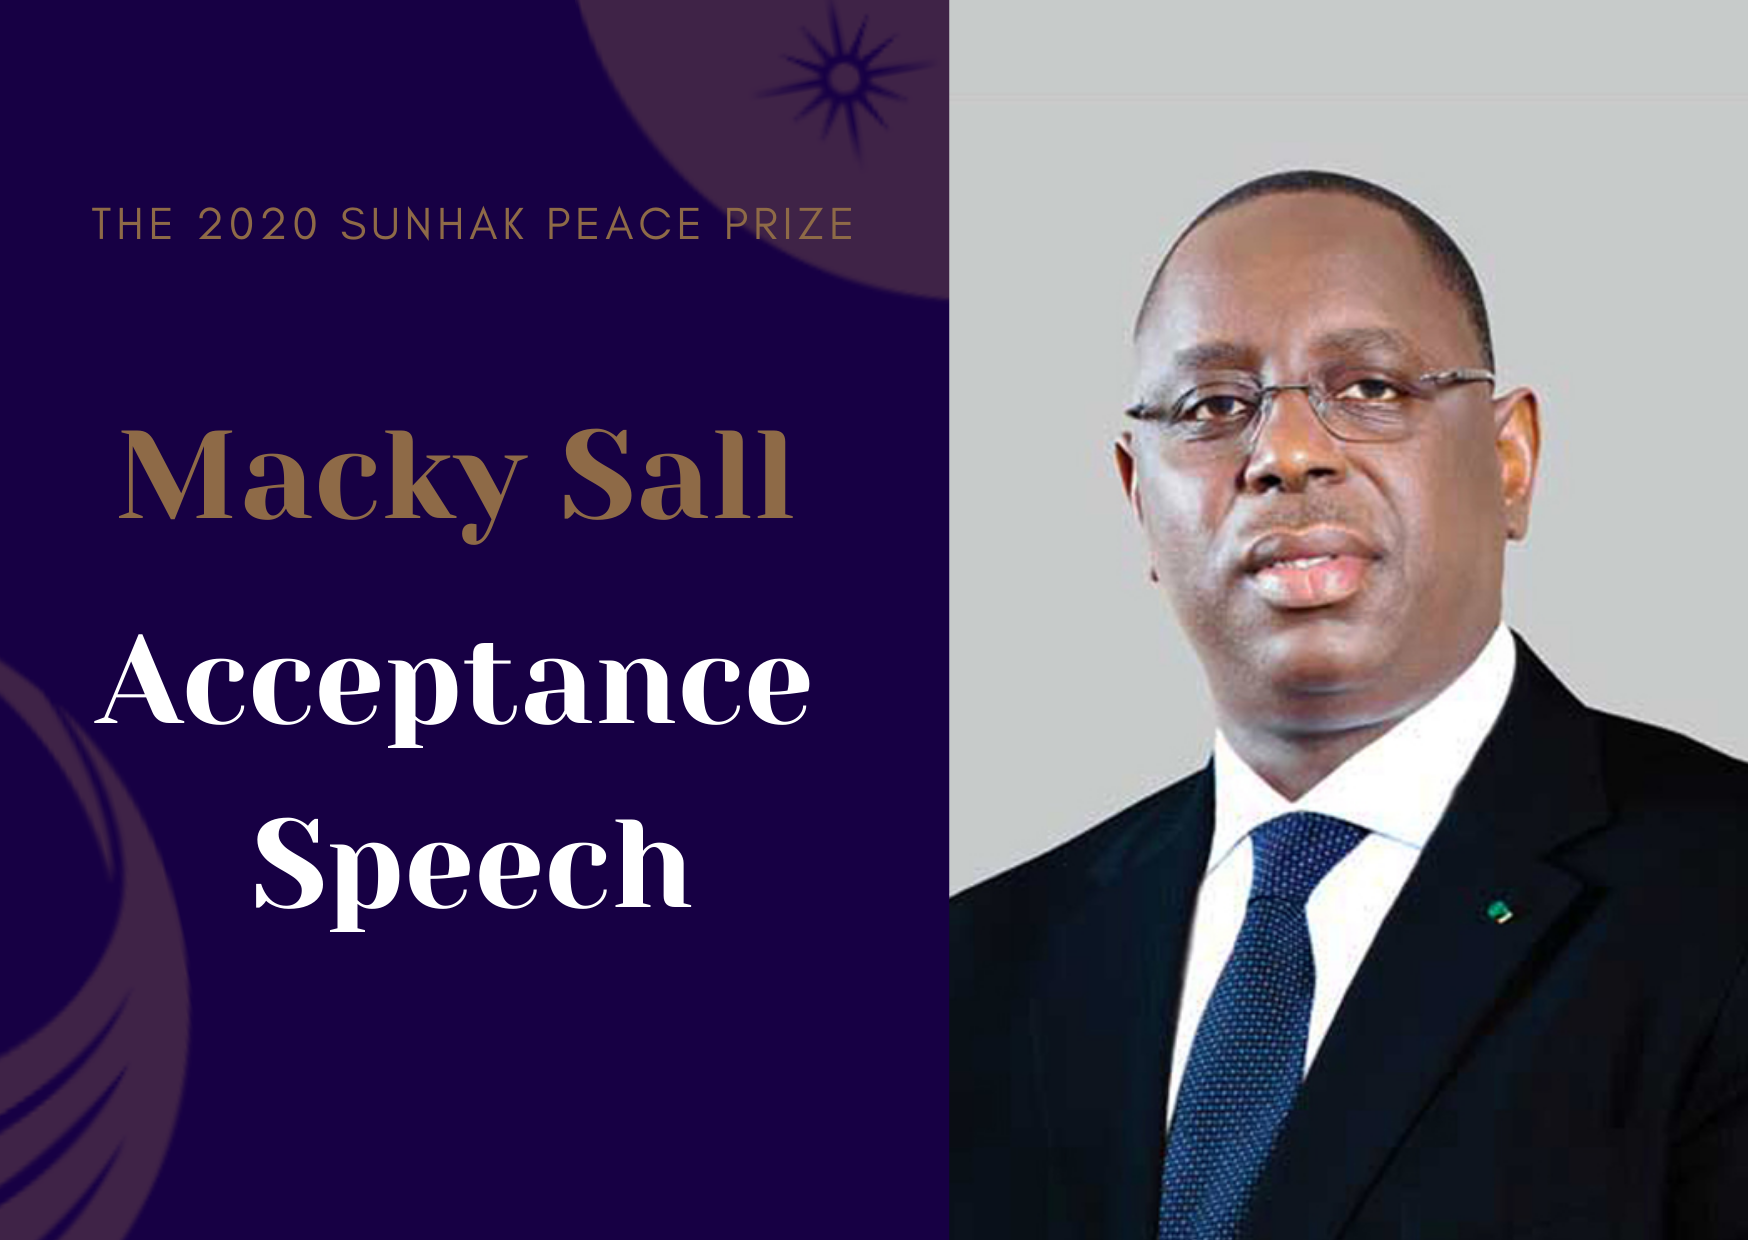 Macky Sall Acceptance Speech 썸네일